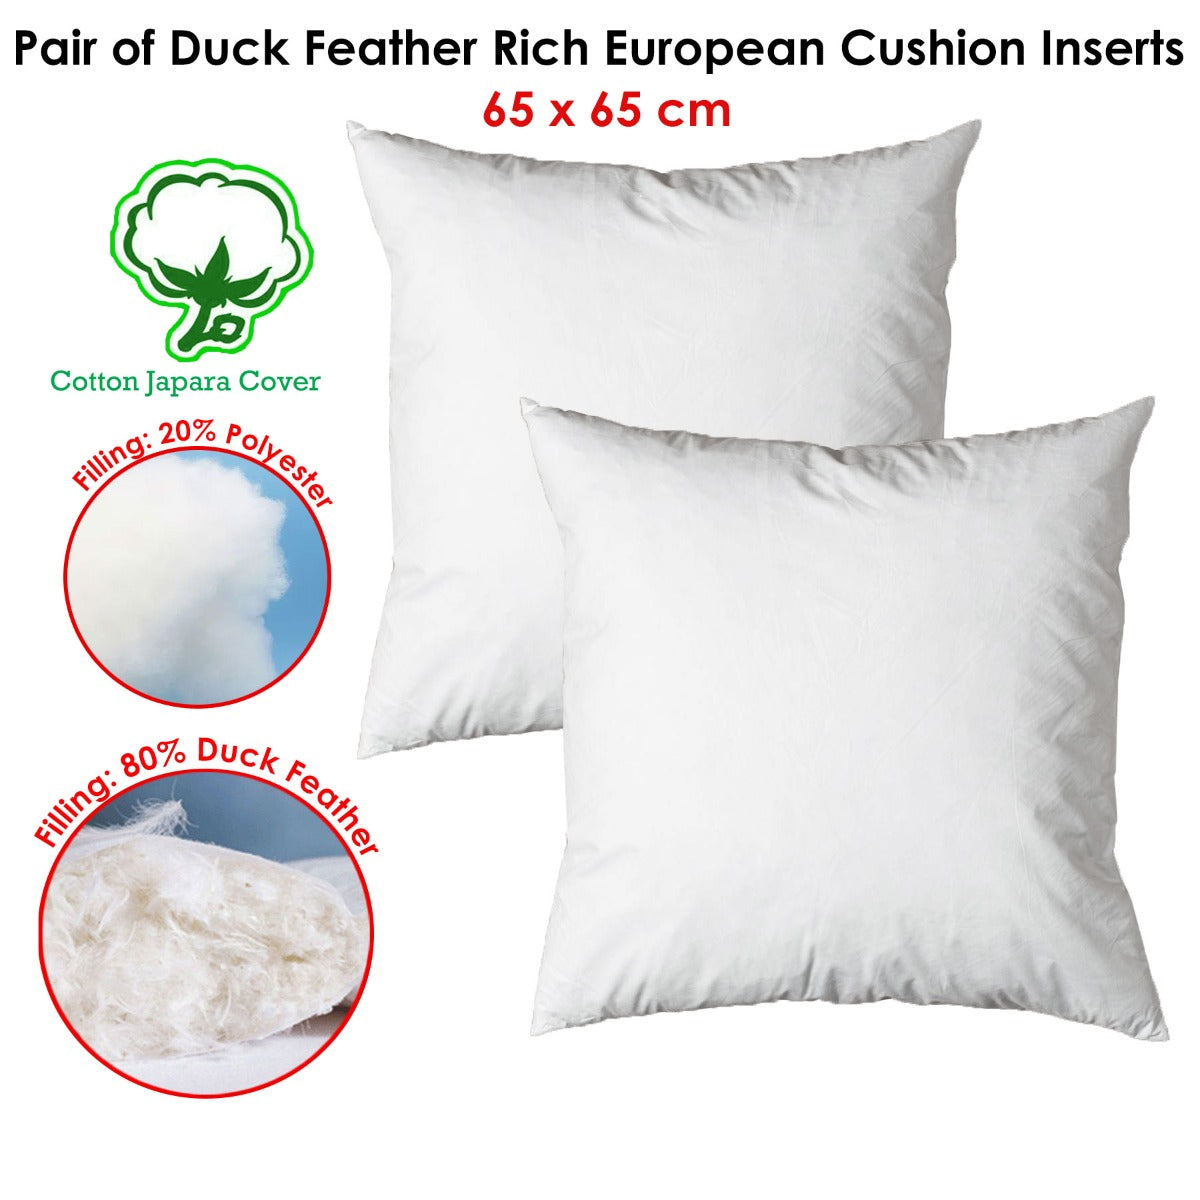 Pair of Duck Feather Rich Fill European Cushion Inserter 65 x 65 cm - Newstart Furniture